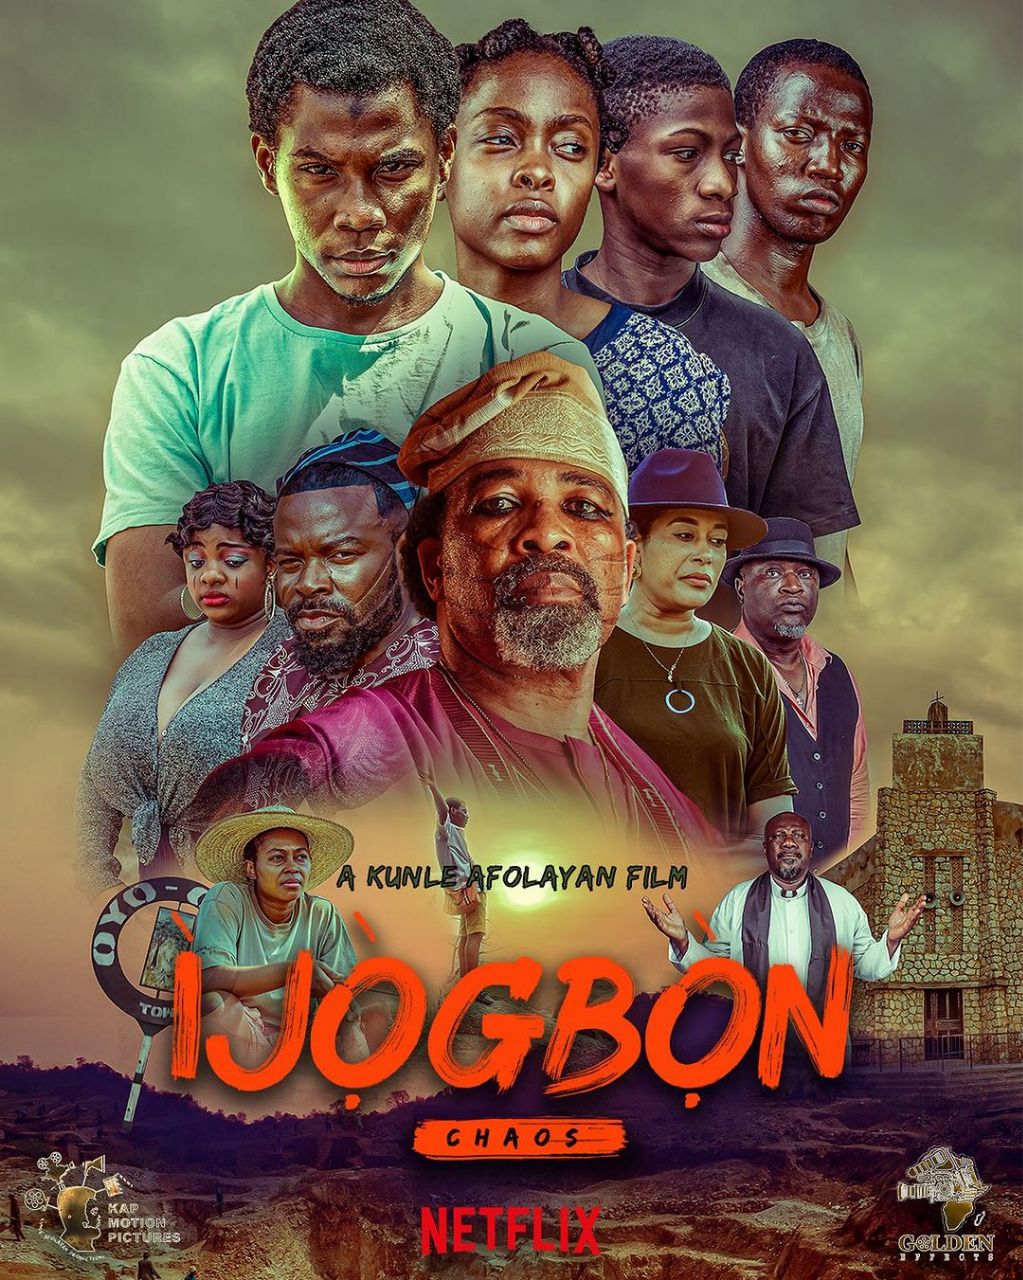 Netflix Unveils Trailer Of Kunle Afolayan's "Ijogbon"